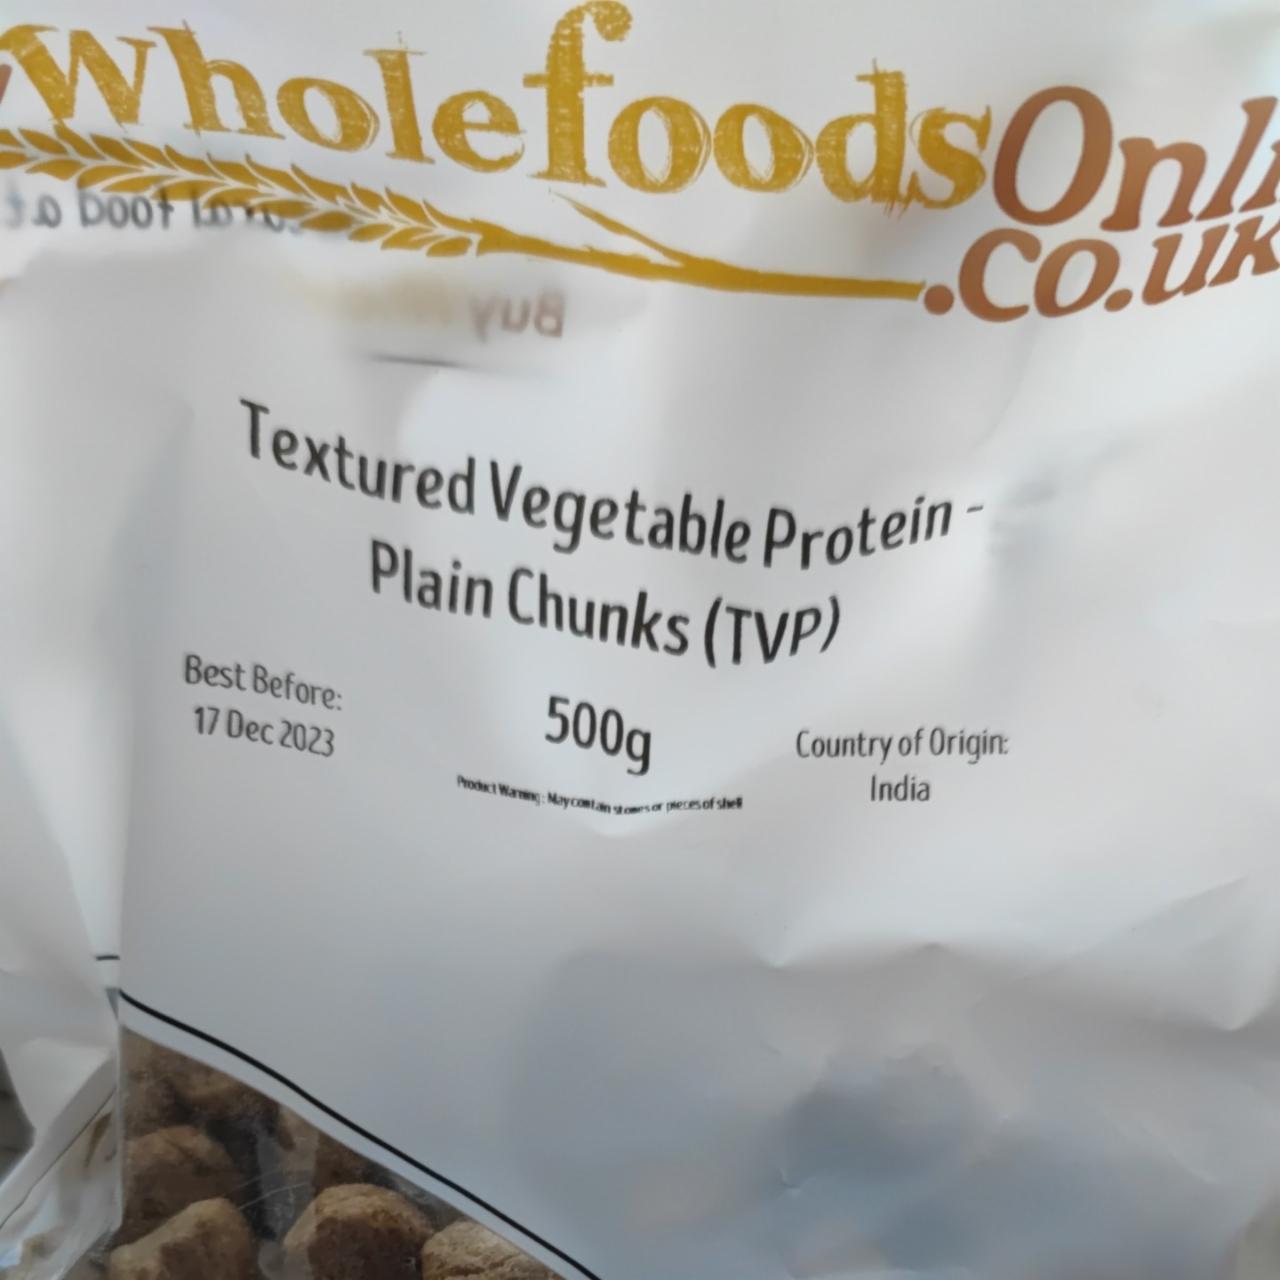 Fotografie - Textured Vegetable Protein - Plain Chunks Whole Foods Online Ltd.